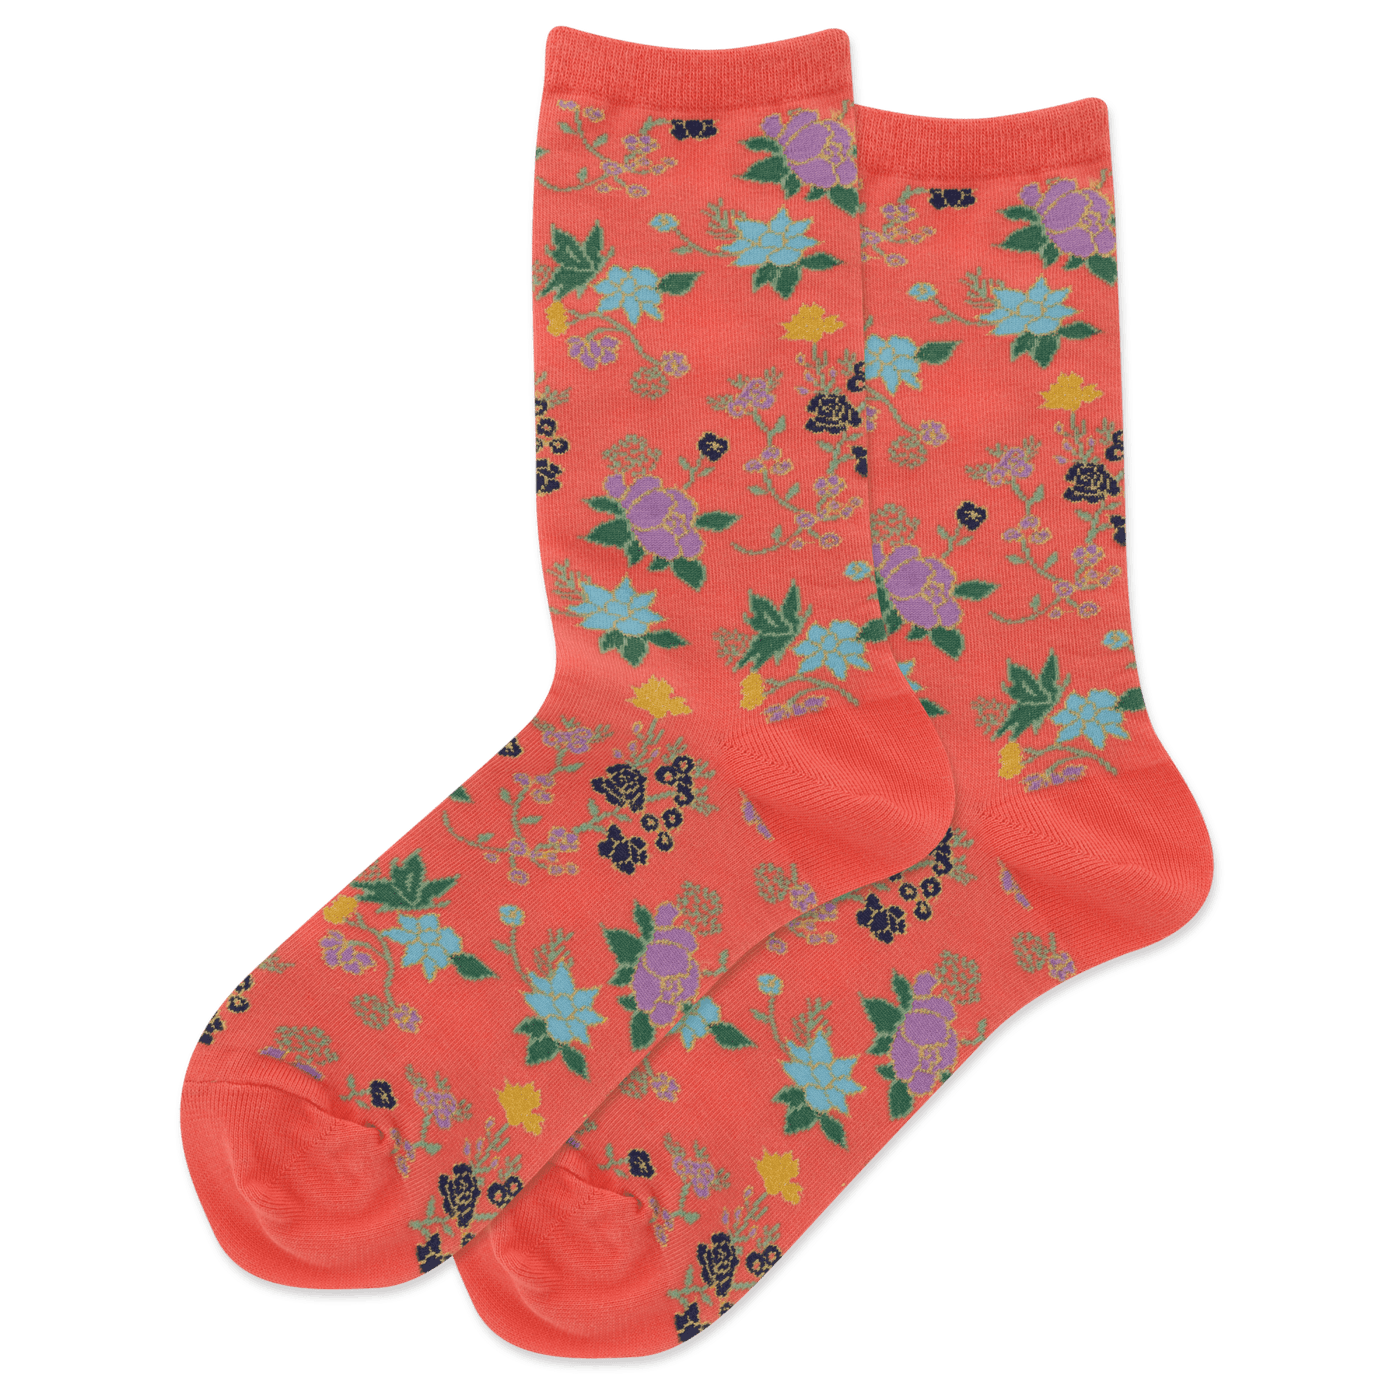 "Asian Floral" Cotton Crew Socks by Hot Sox - Medium